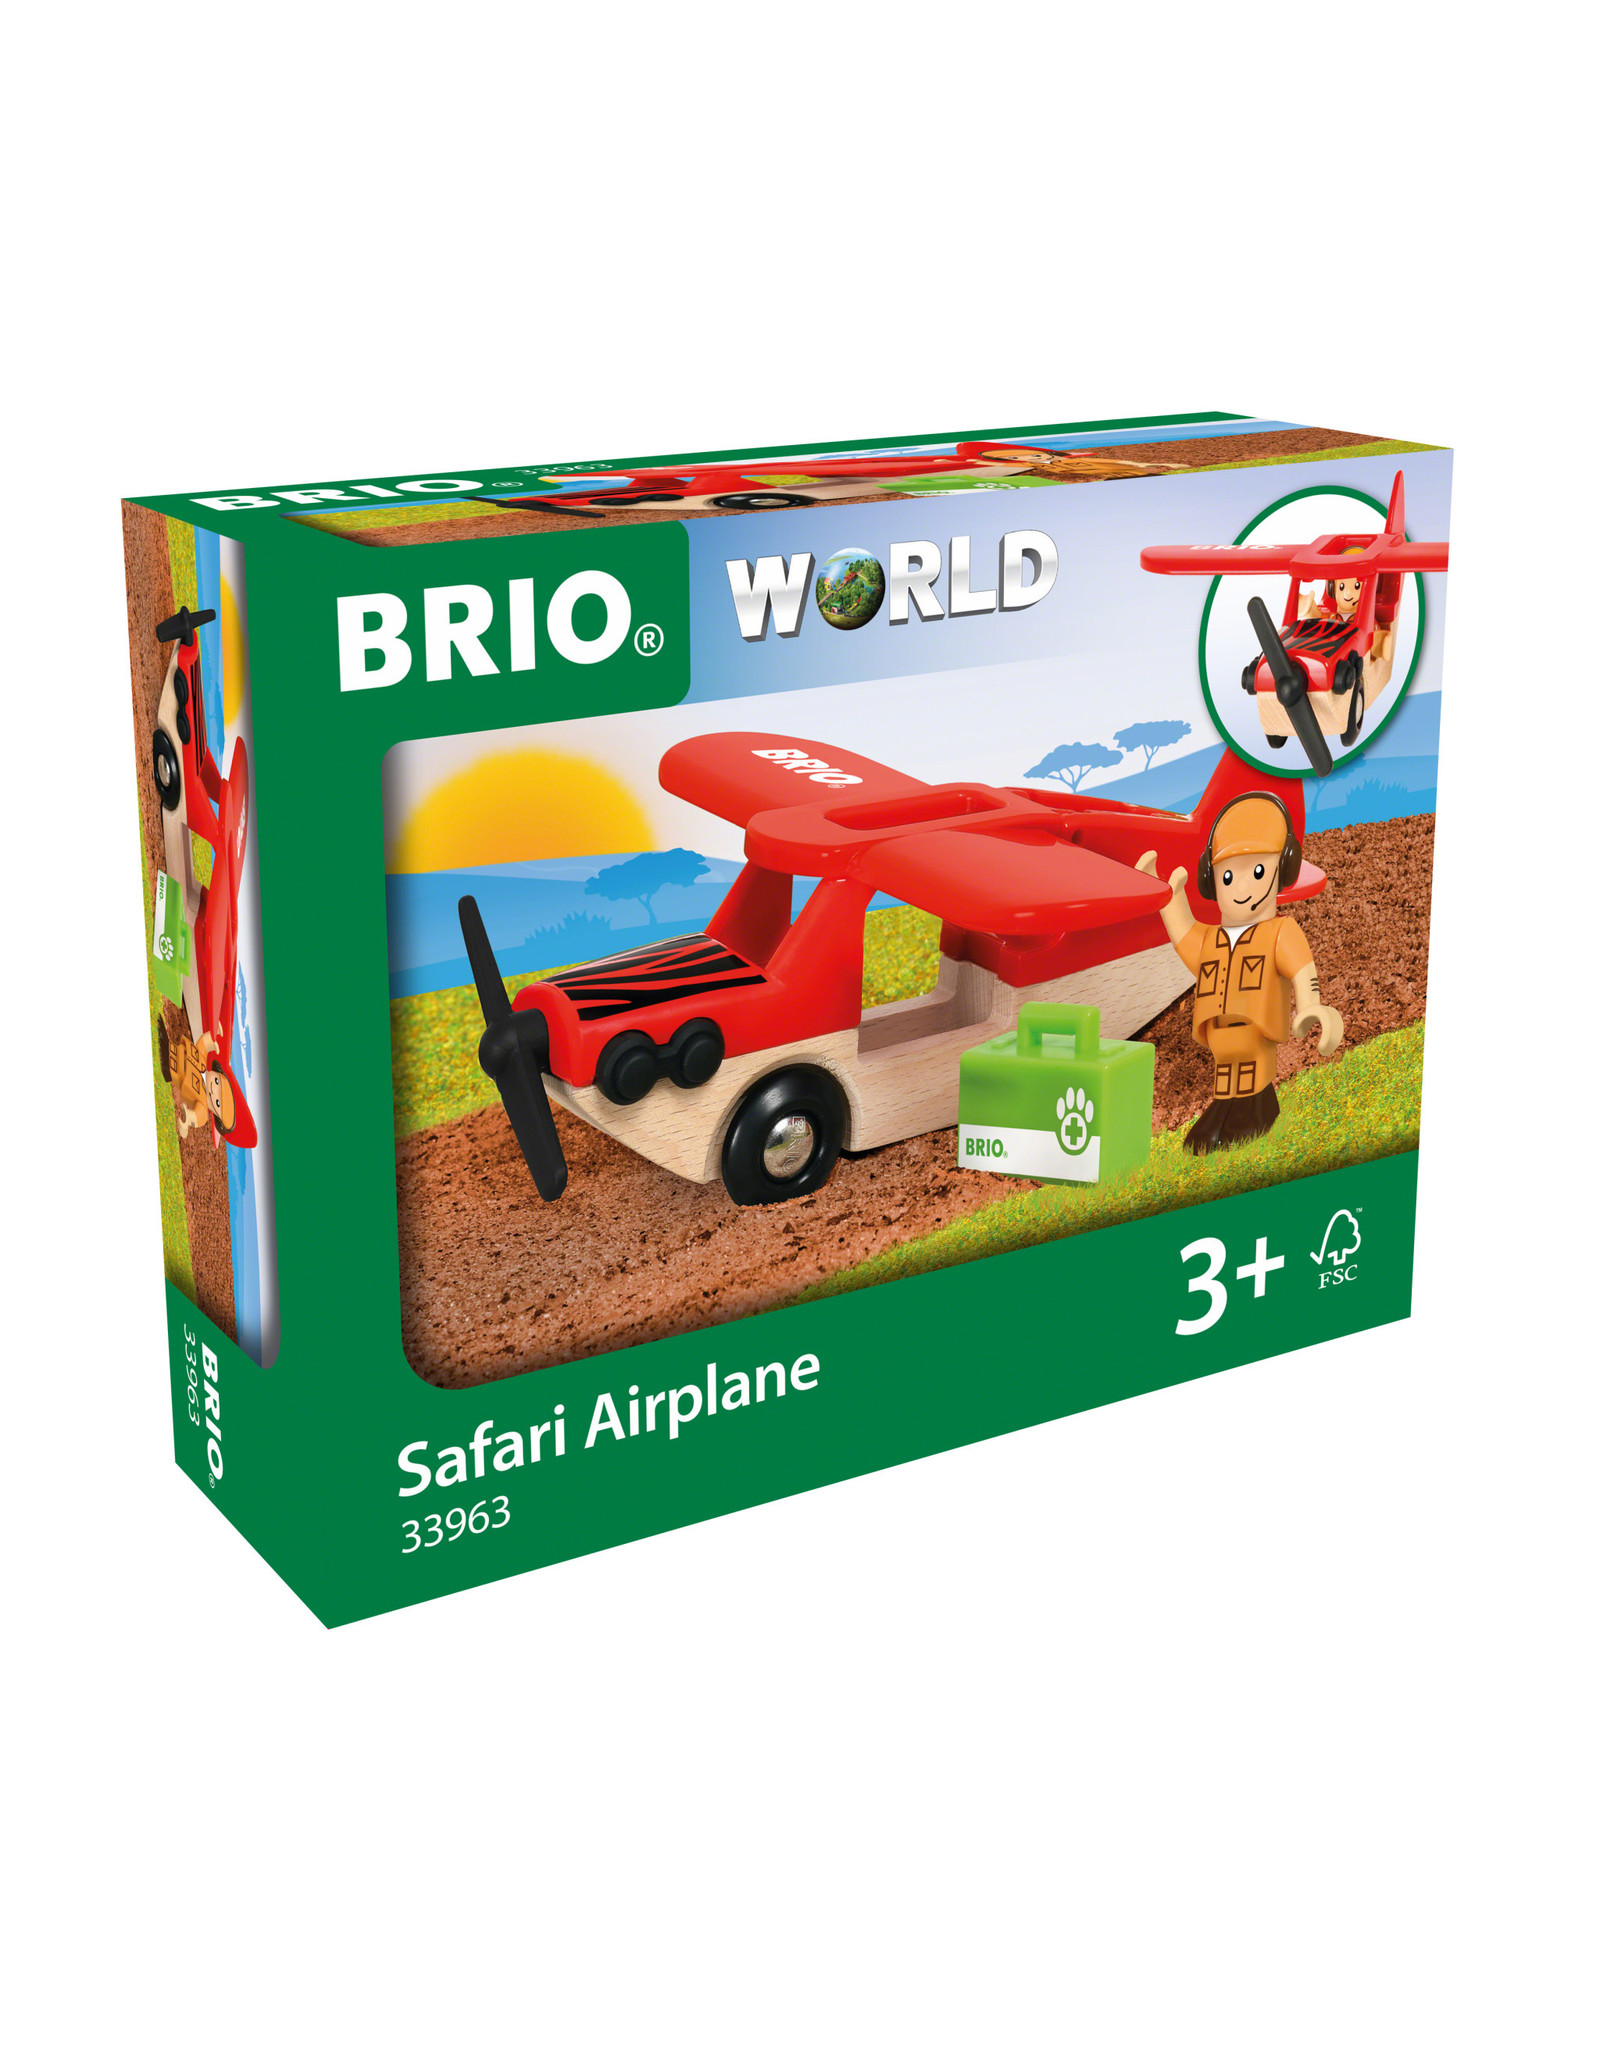 Brio Brio World 33963 Safari Vliegtuig - Safari Airplane